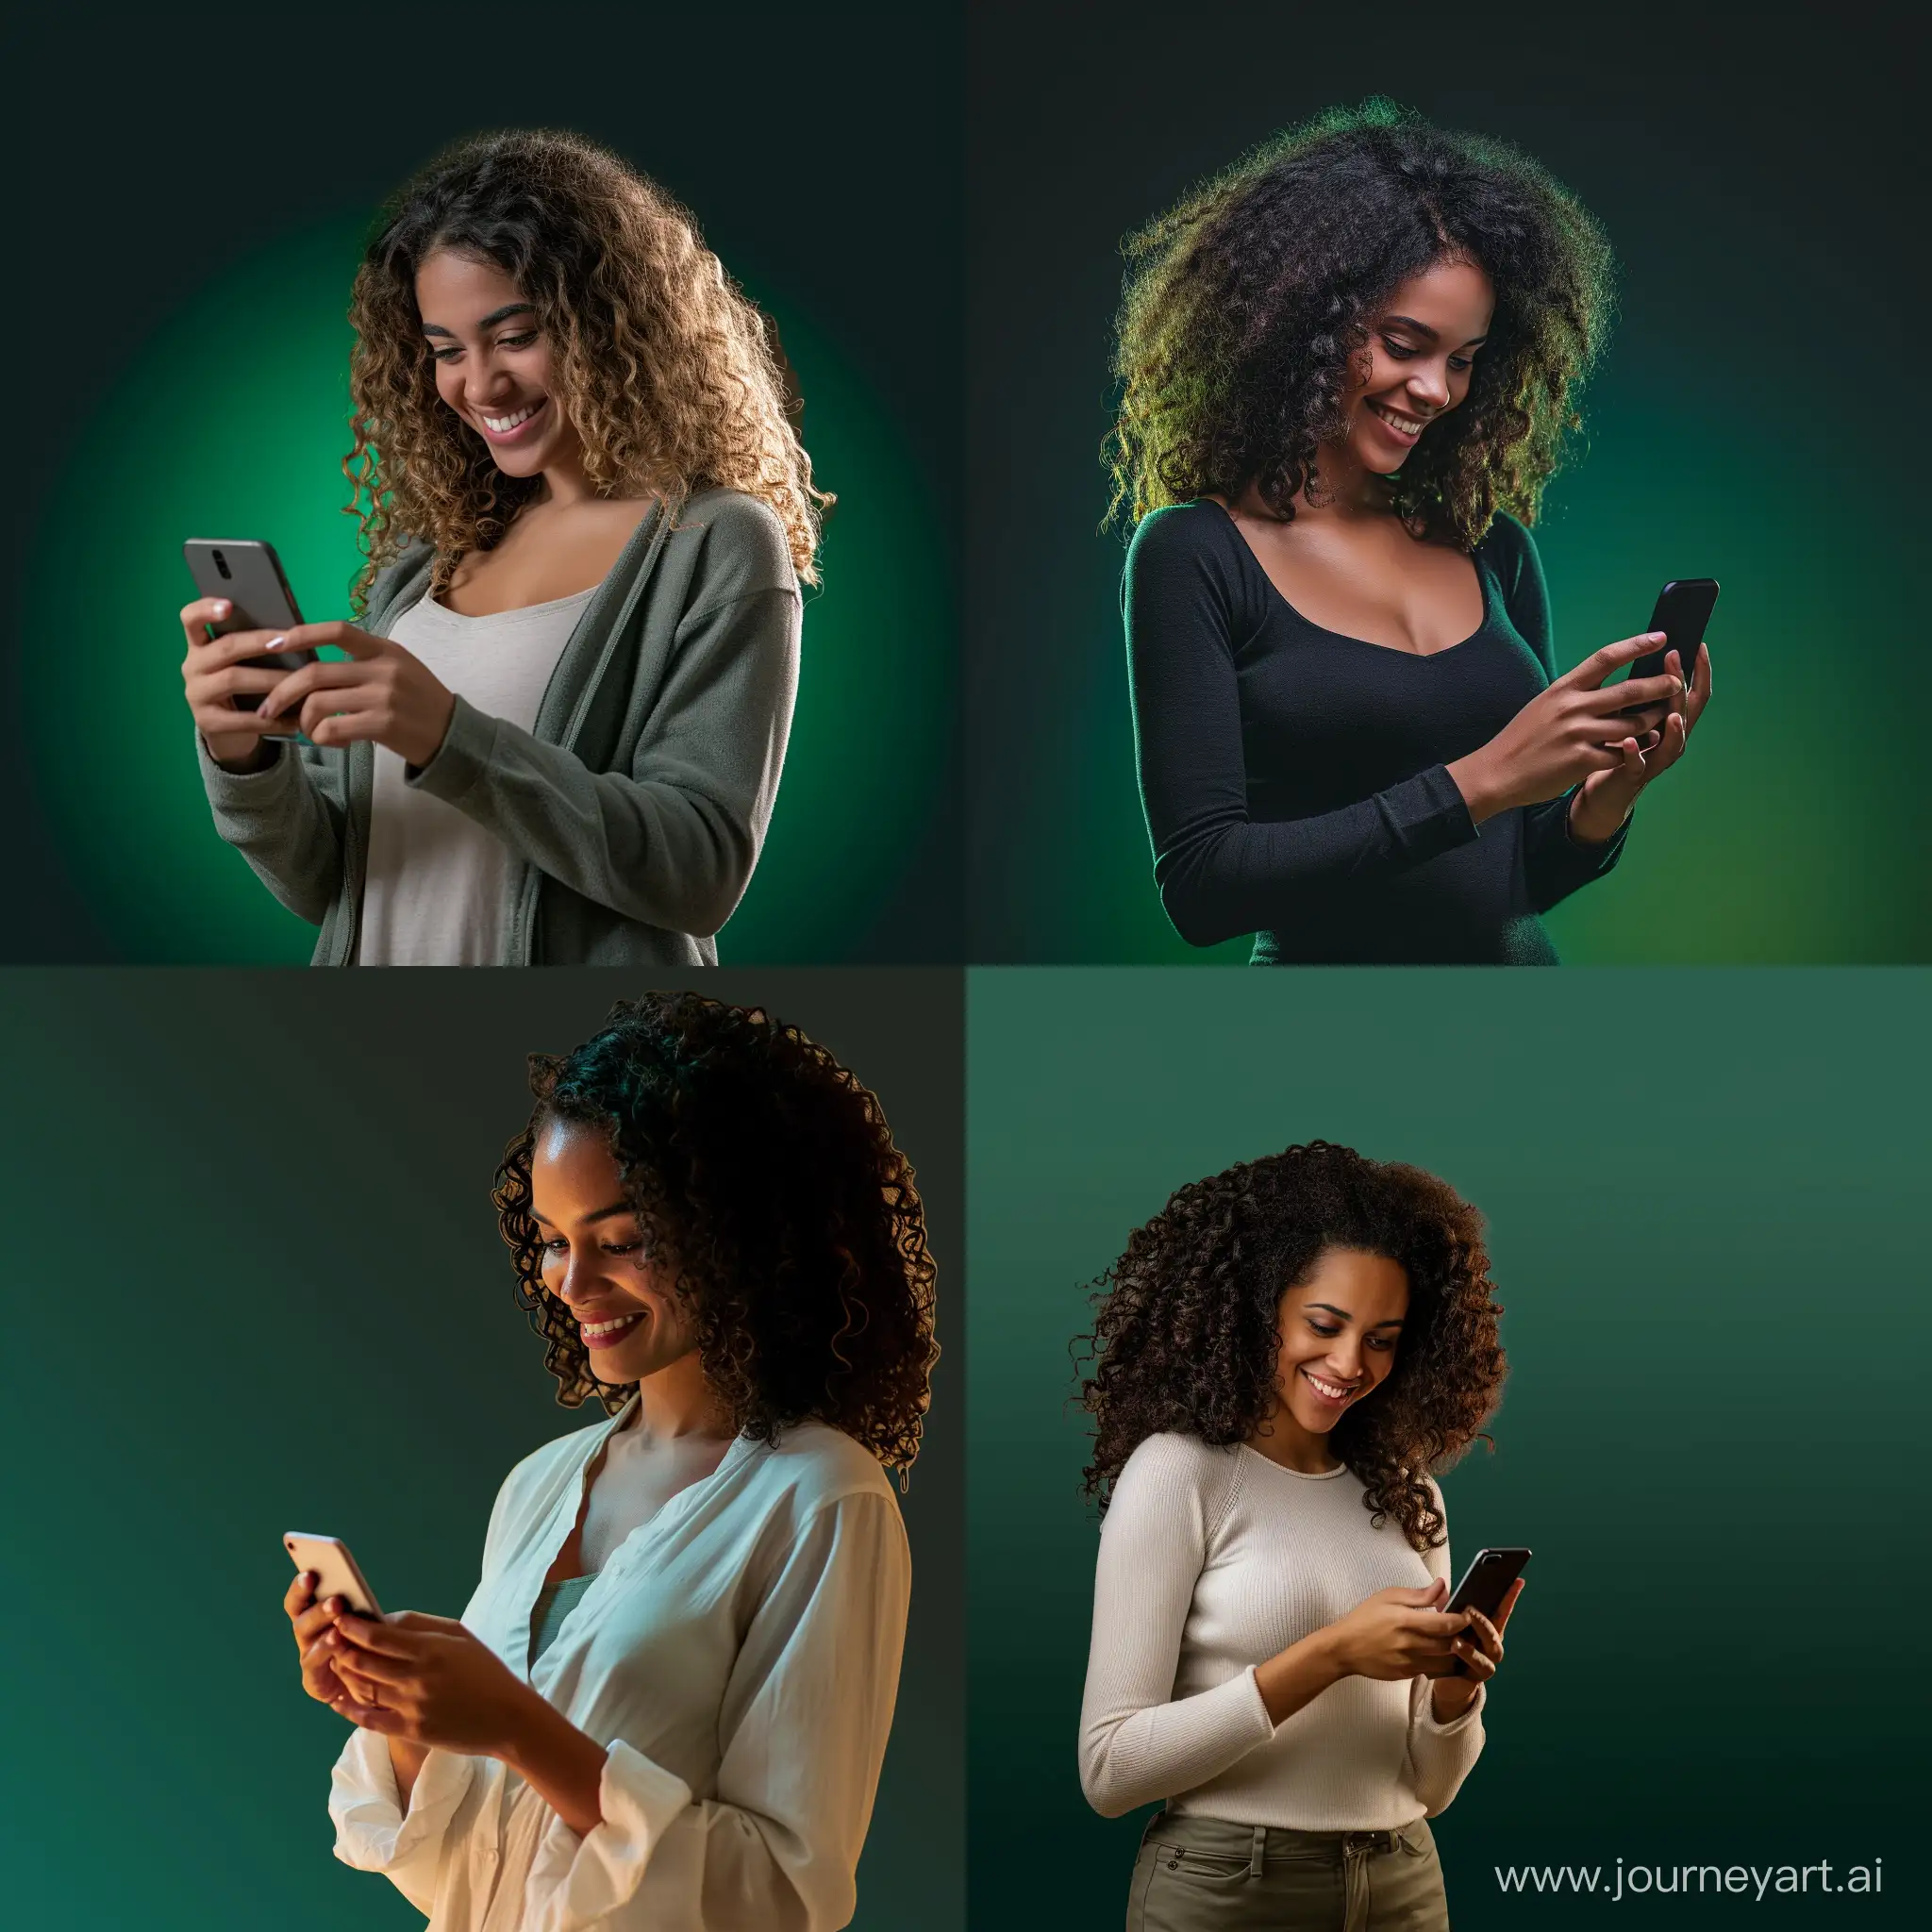 Joyful-Brazilian-Woman-Messaging-on-Smartphone-in-Natural-Light